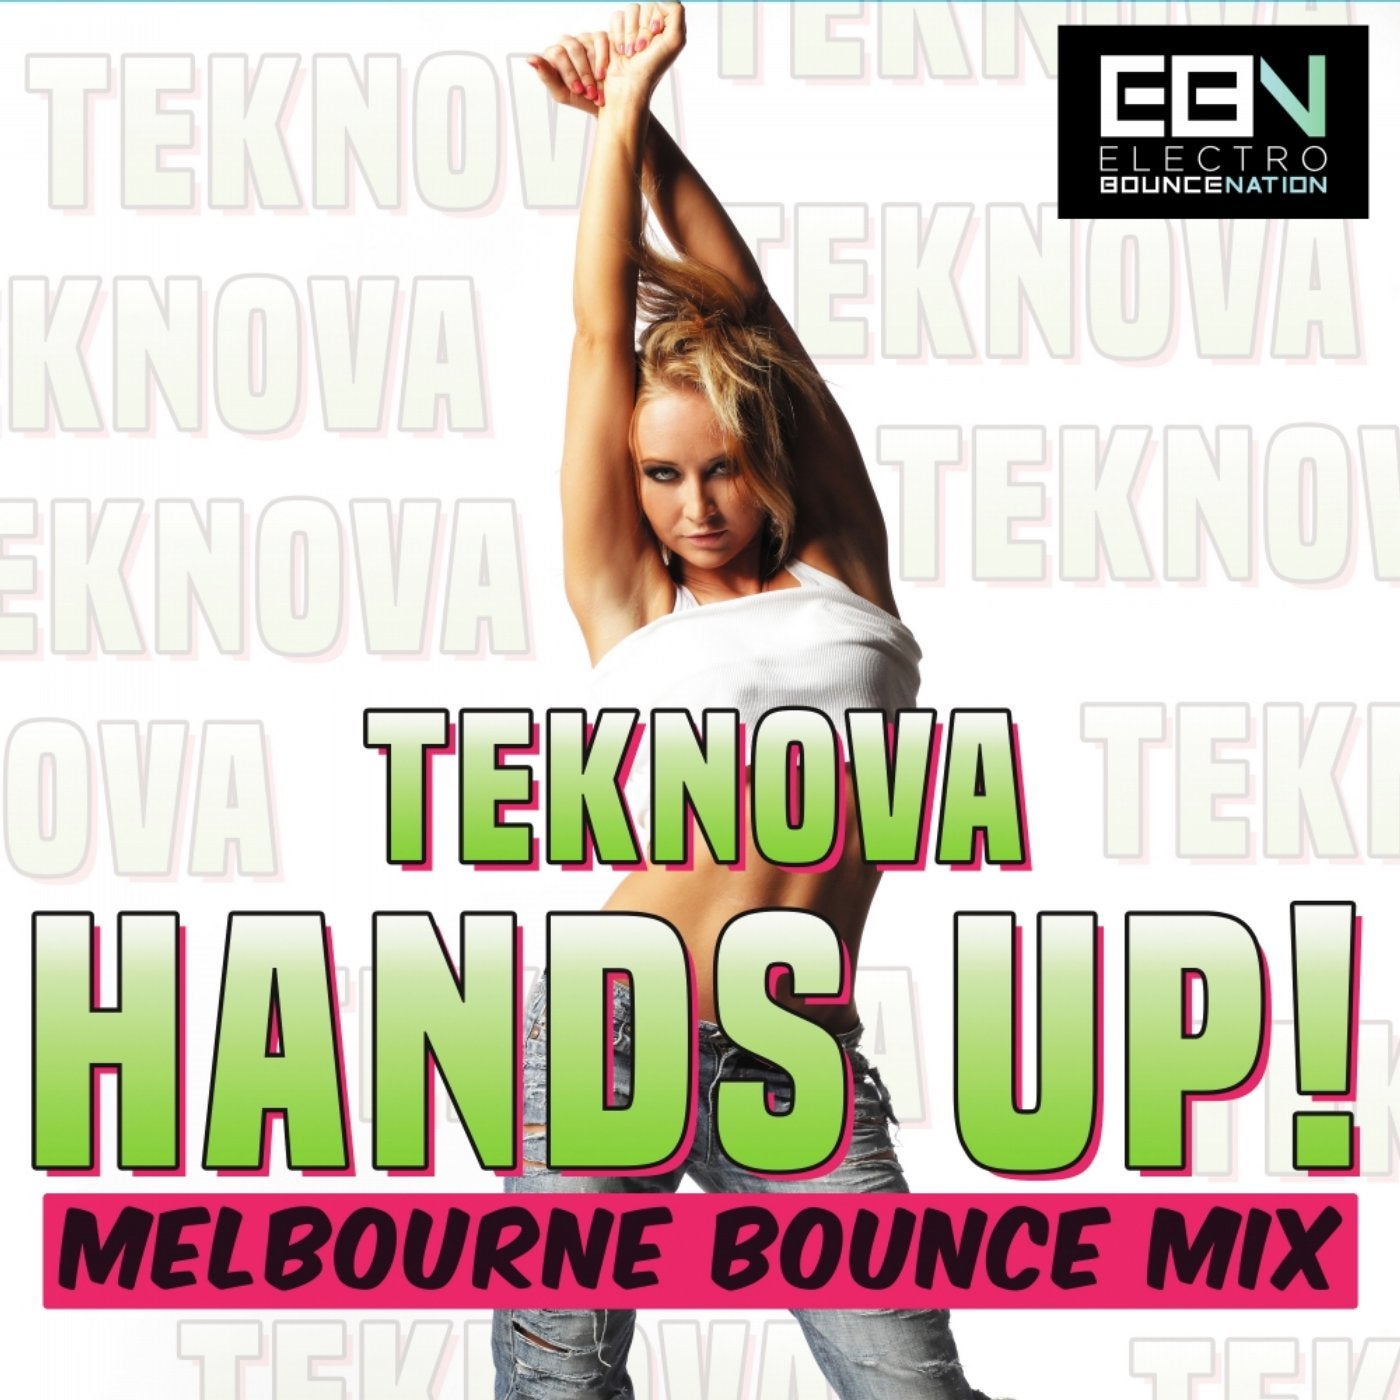 Bounce mix. Melbourne Bounce Mix. Teknova исполнитель. Hands up песня. Teknova - Katyusha.